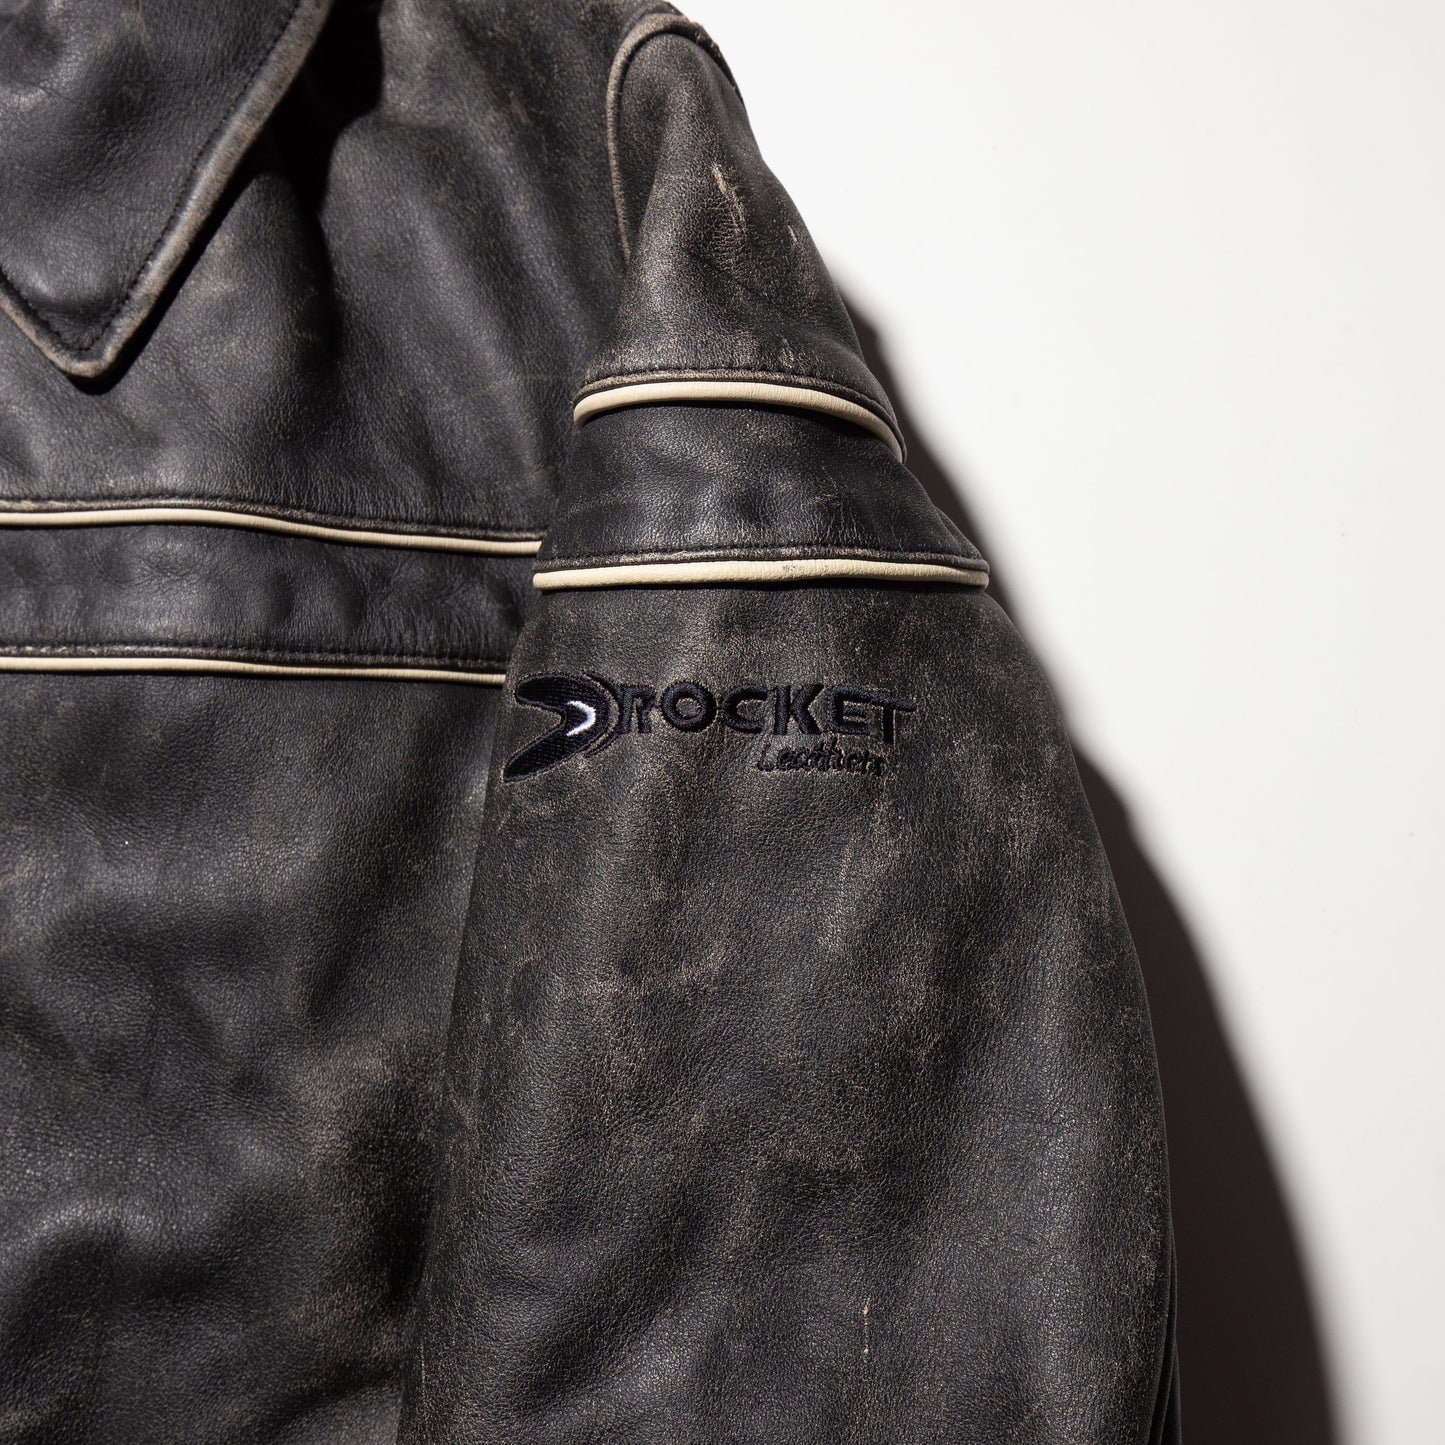 vintage rocket faded motocross leather jacket